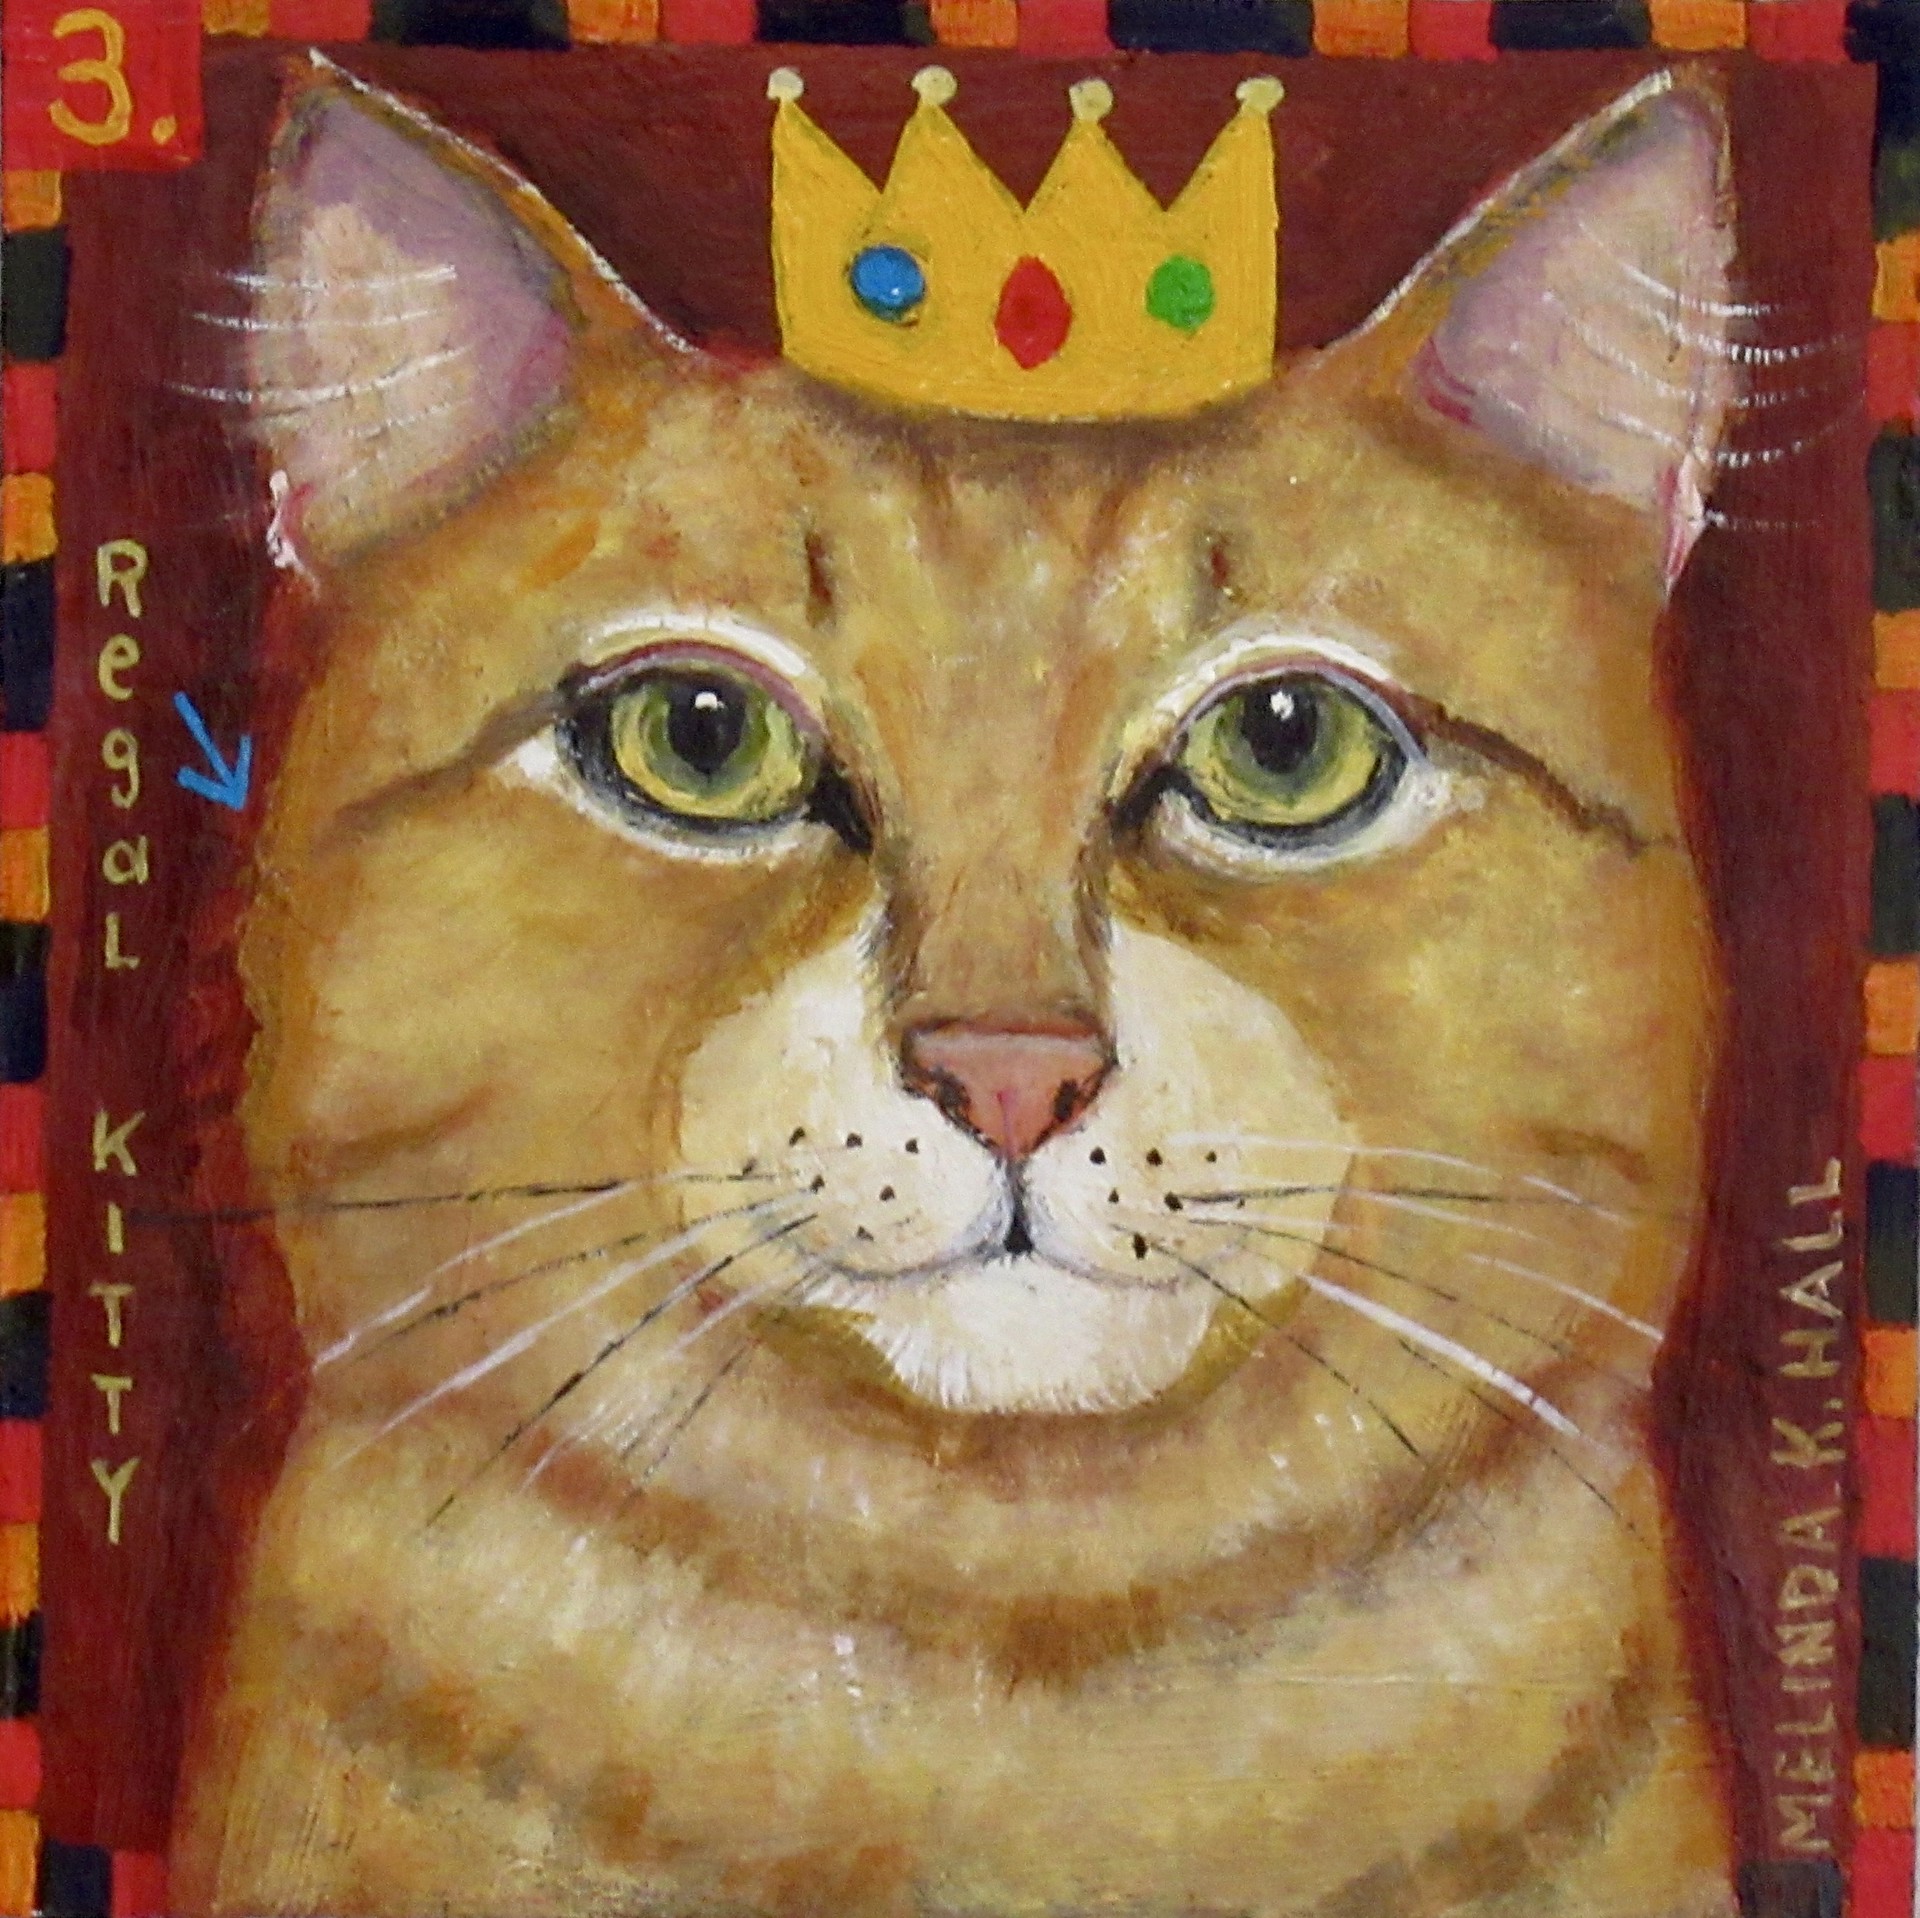 Regal Kitty #3 by Melinda K. Hall